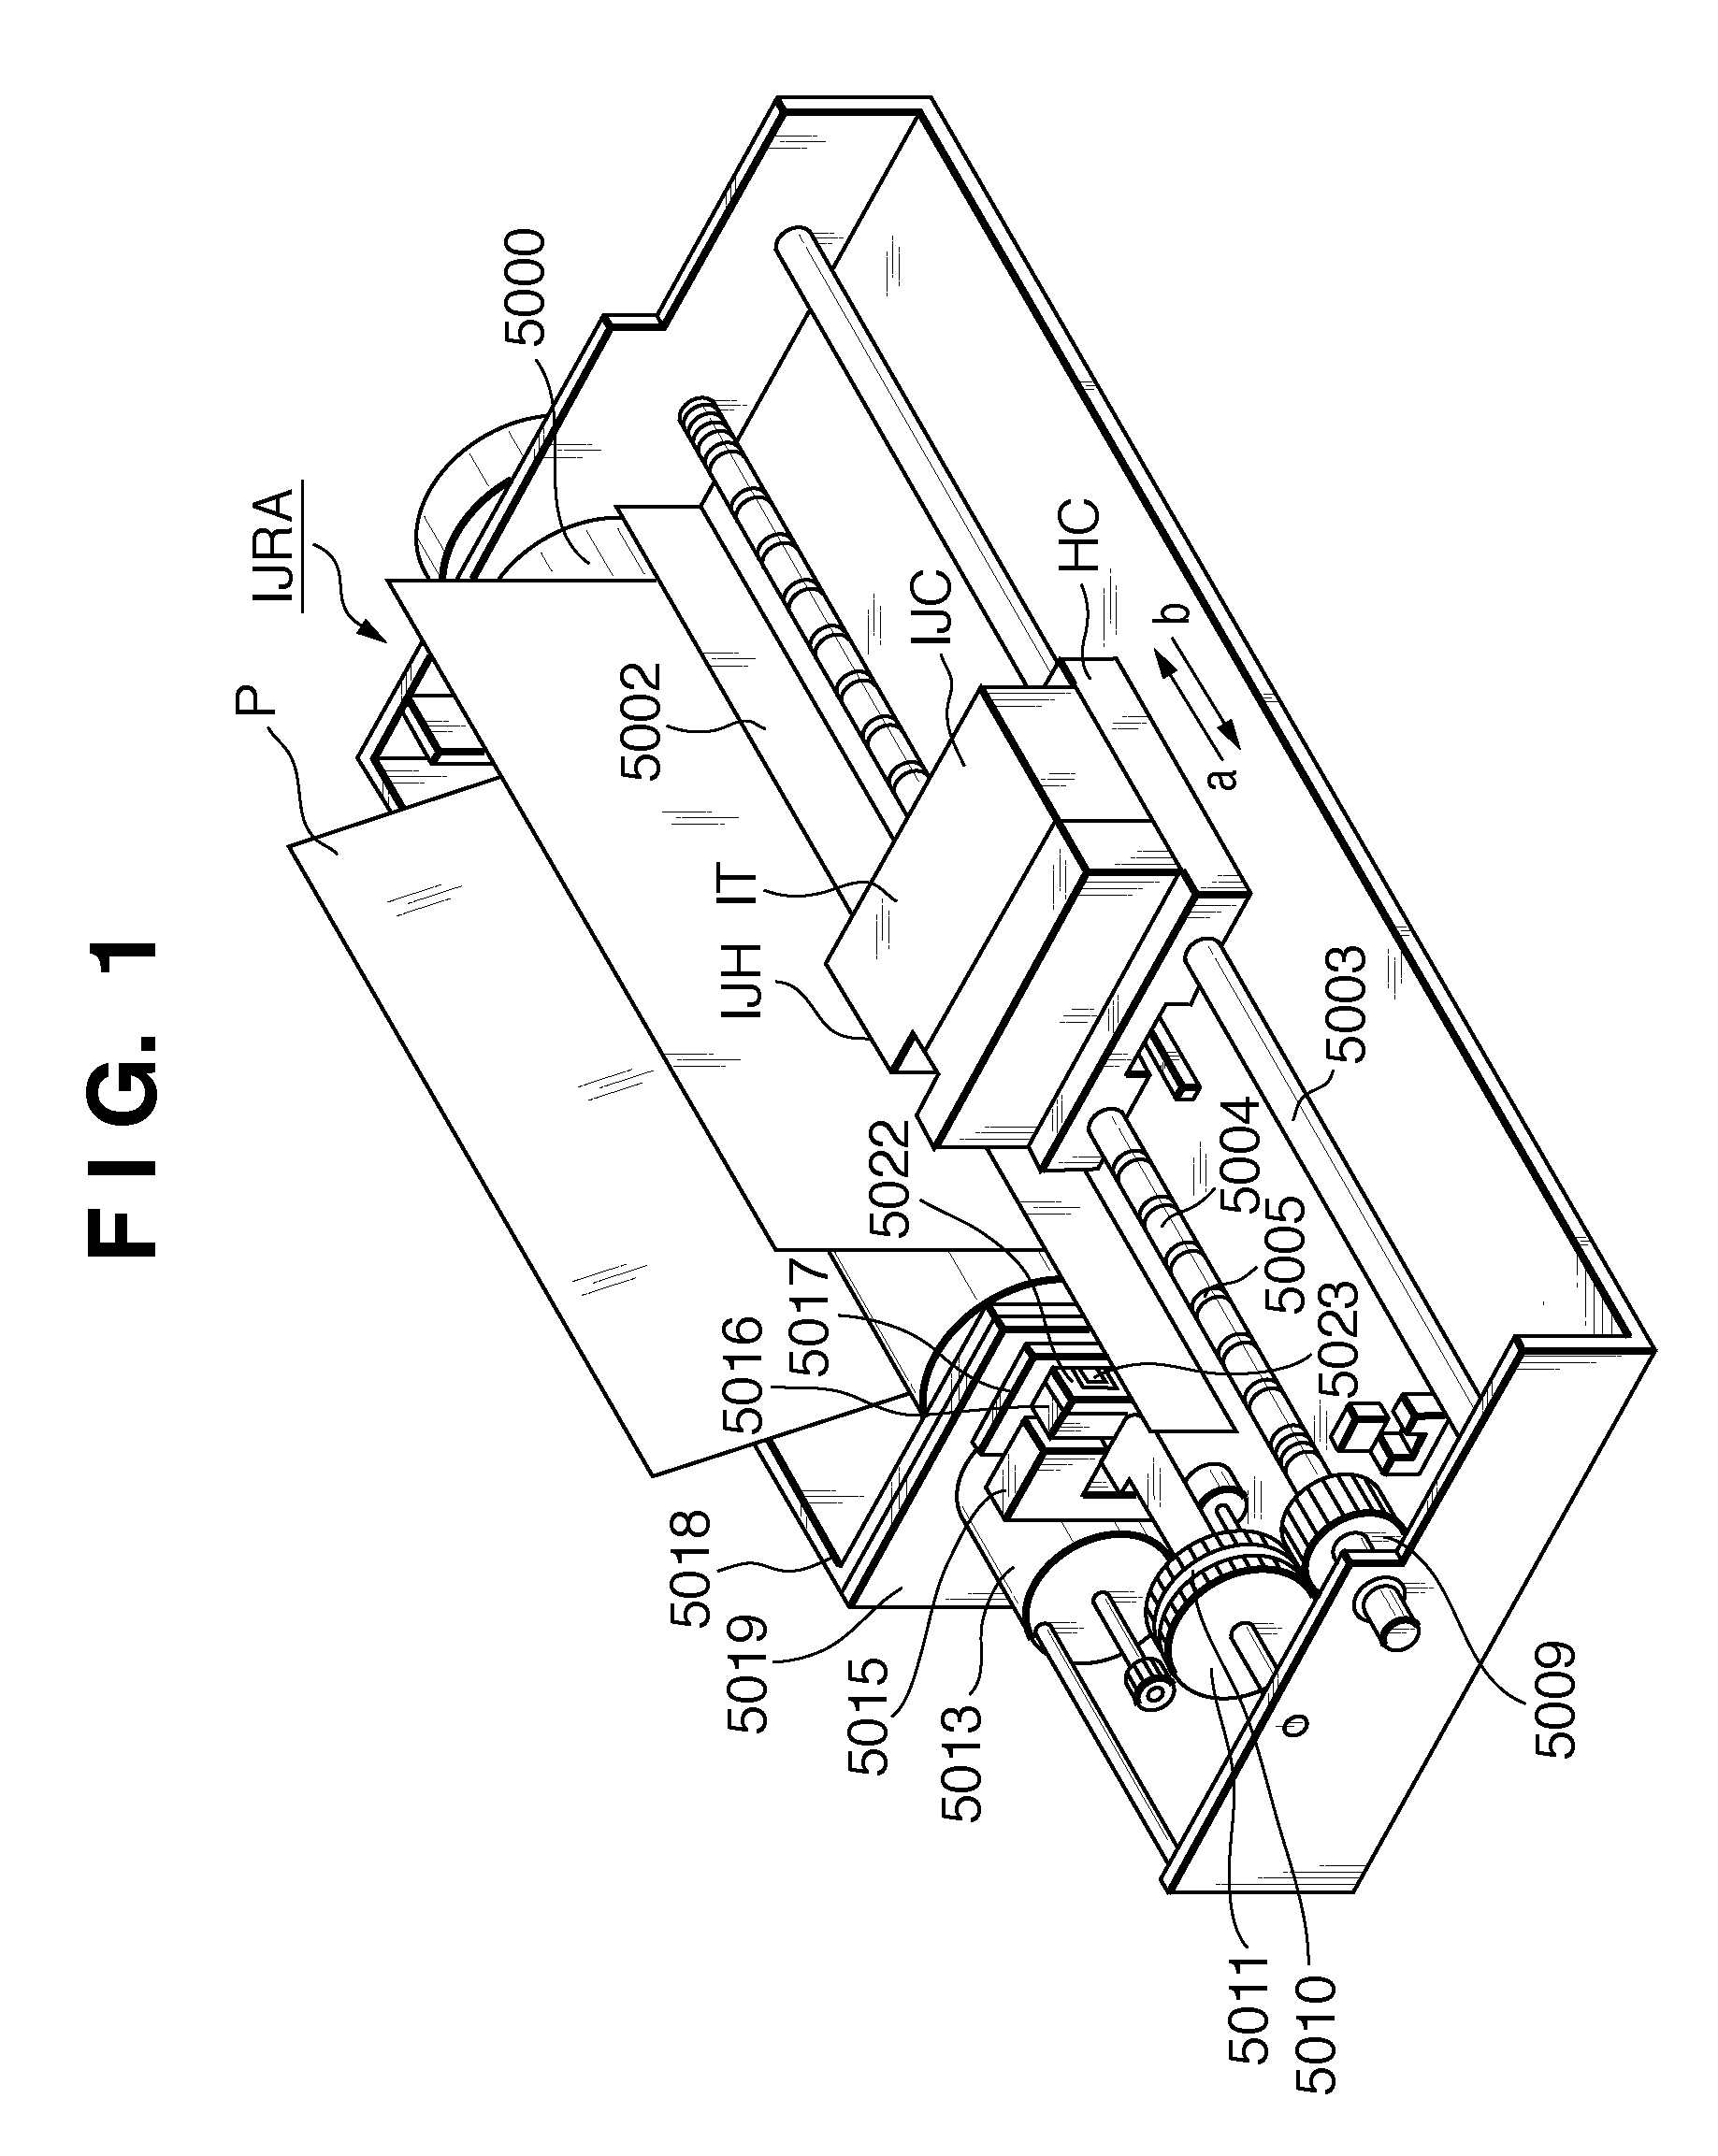 Printhead substrate, printhead, head cartridge, and printing apparatus